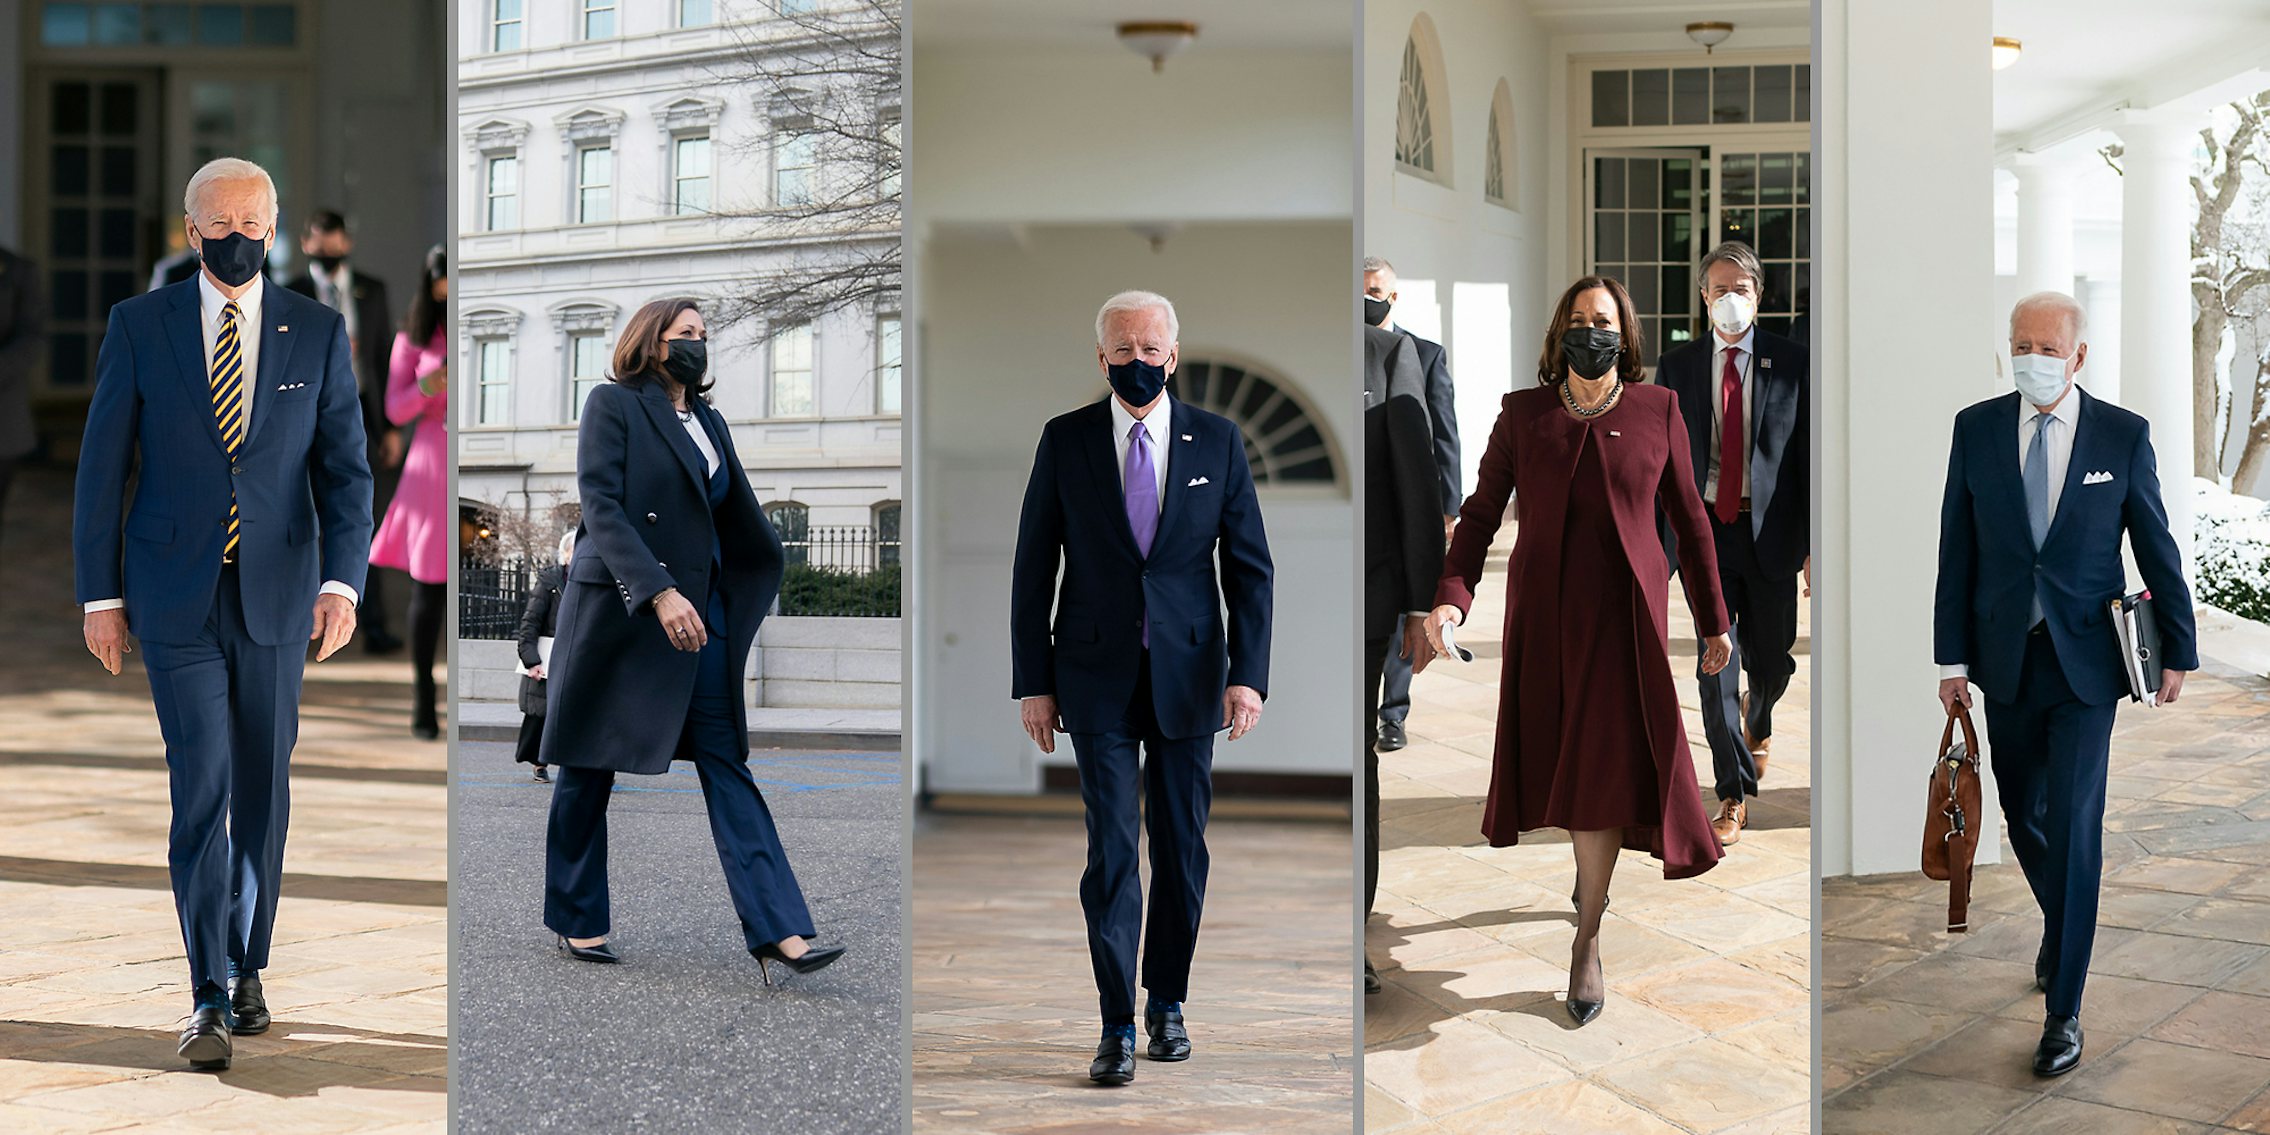 President Joe Biden and Vice President Kamala Harris walking separately.